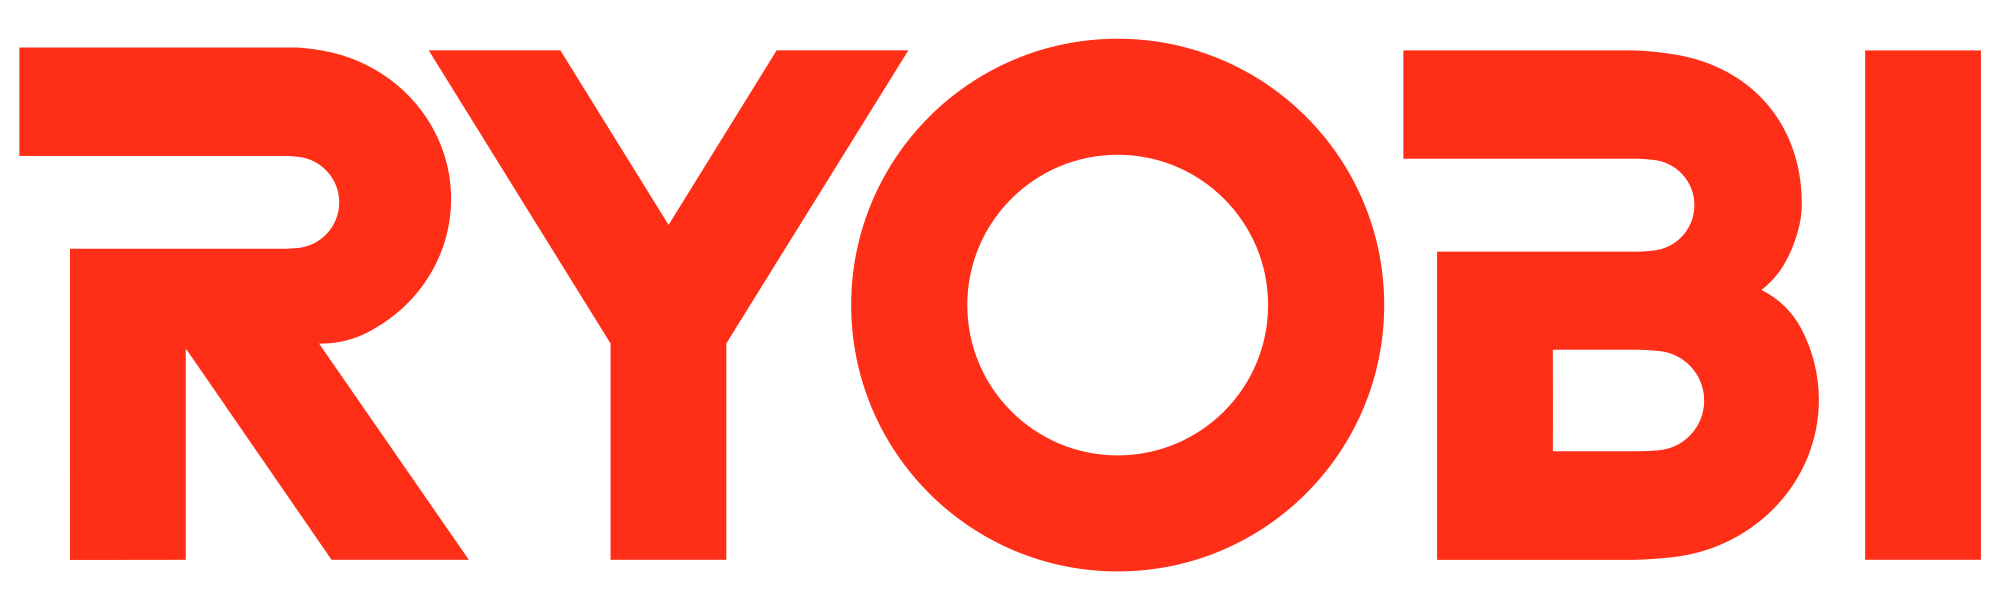 Ryobi Logo Image